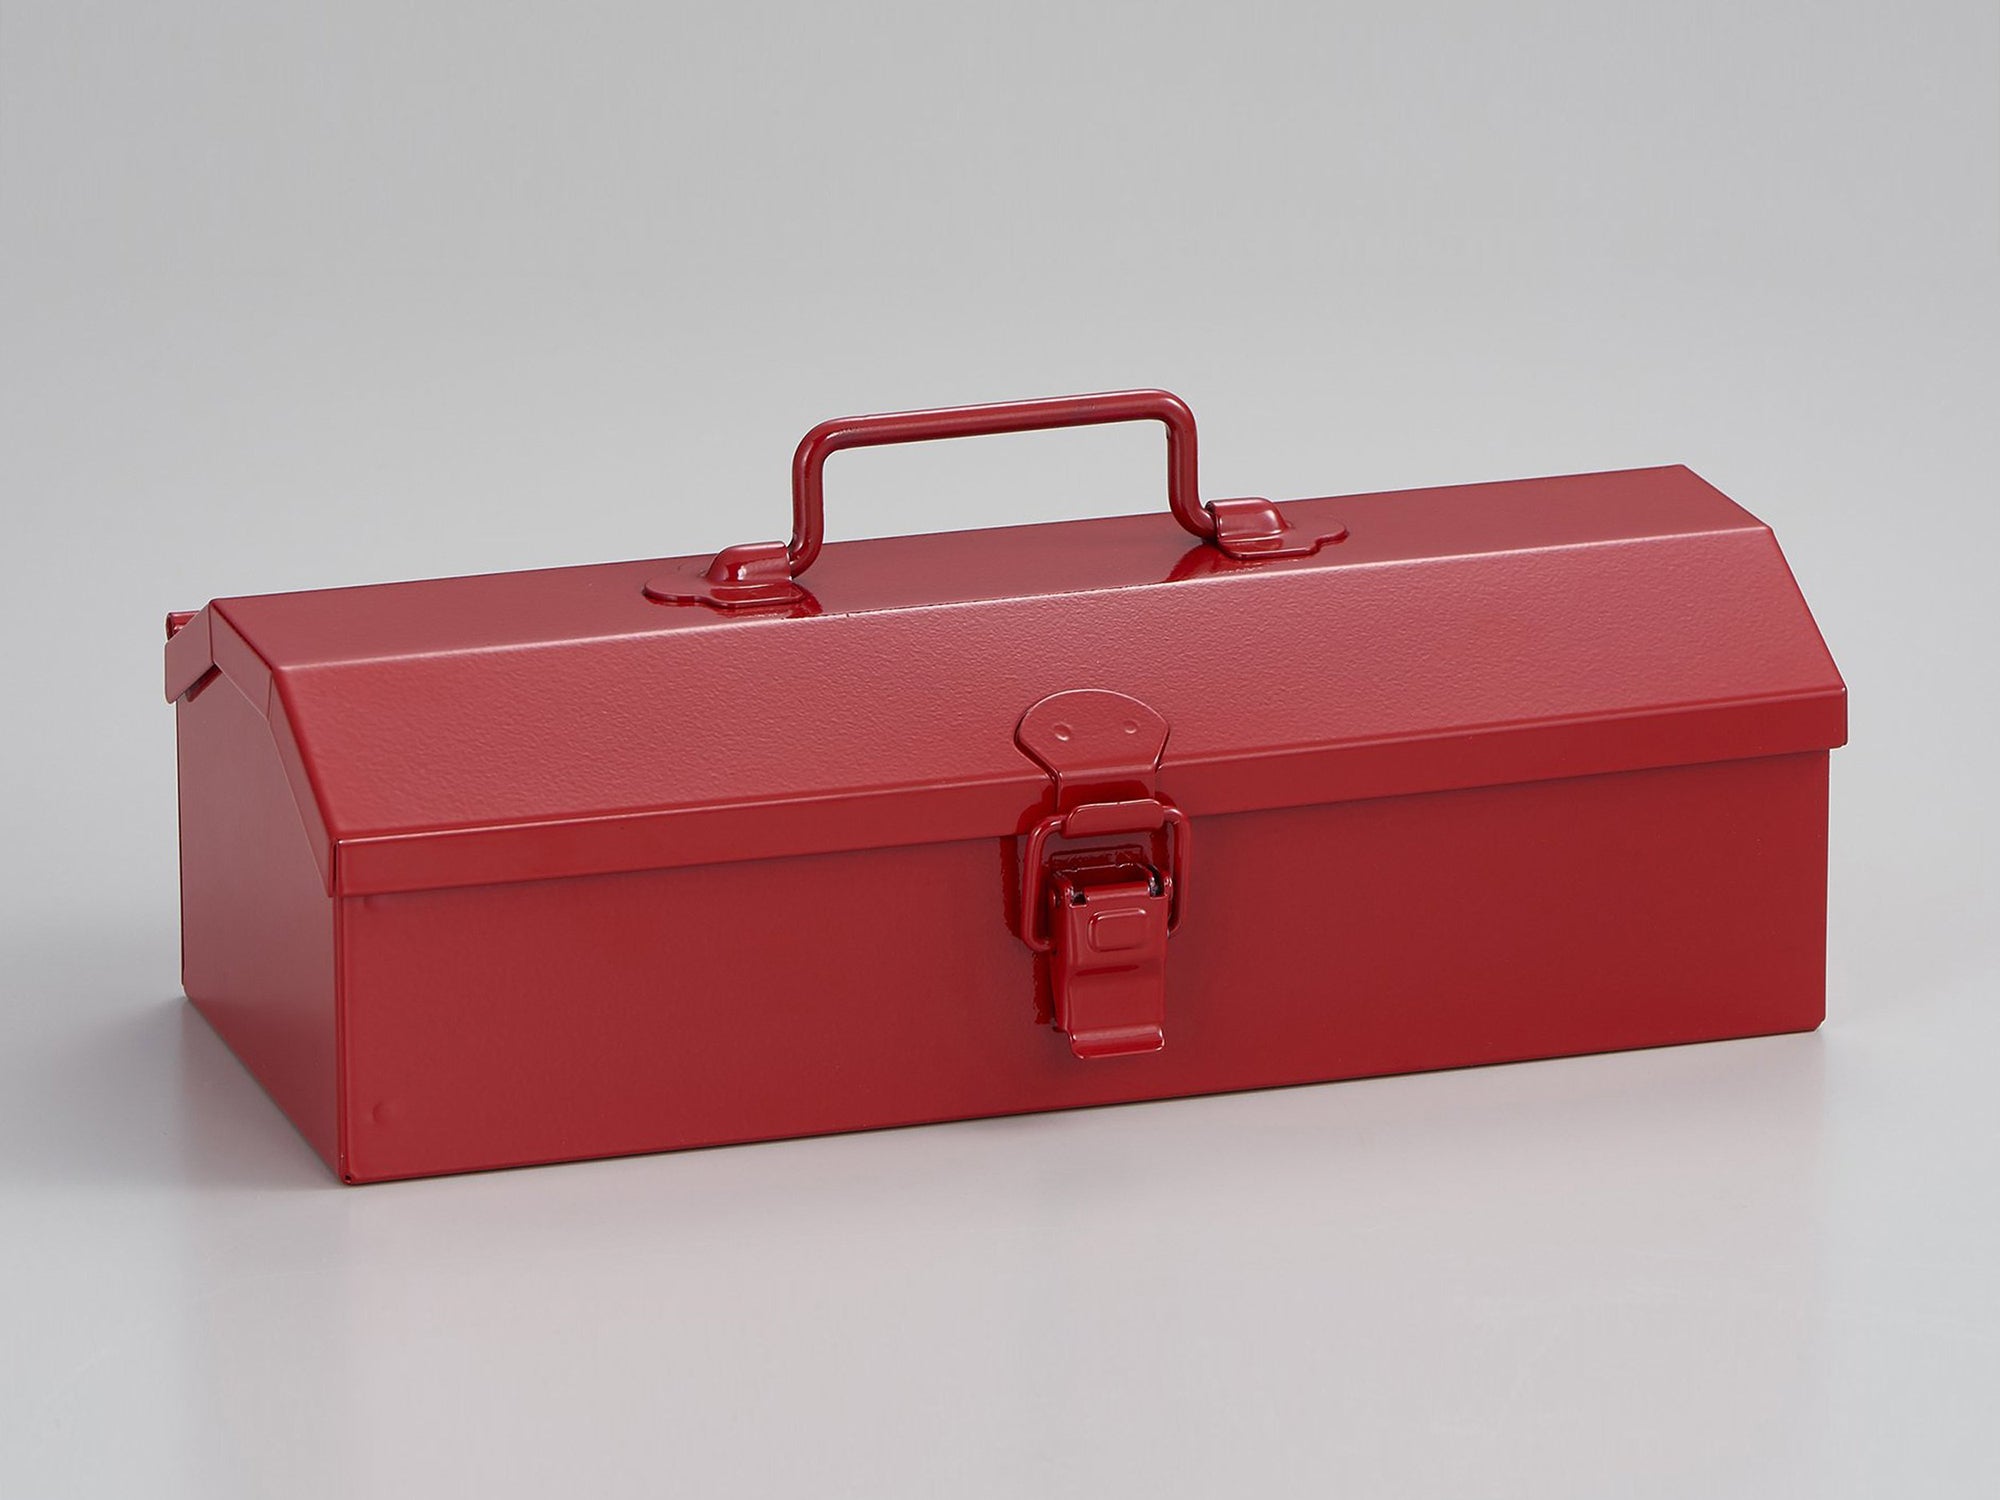 Toyo Steel Mini Box Y-20 Red